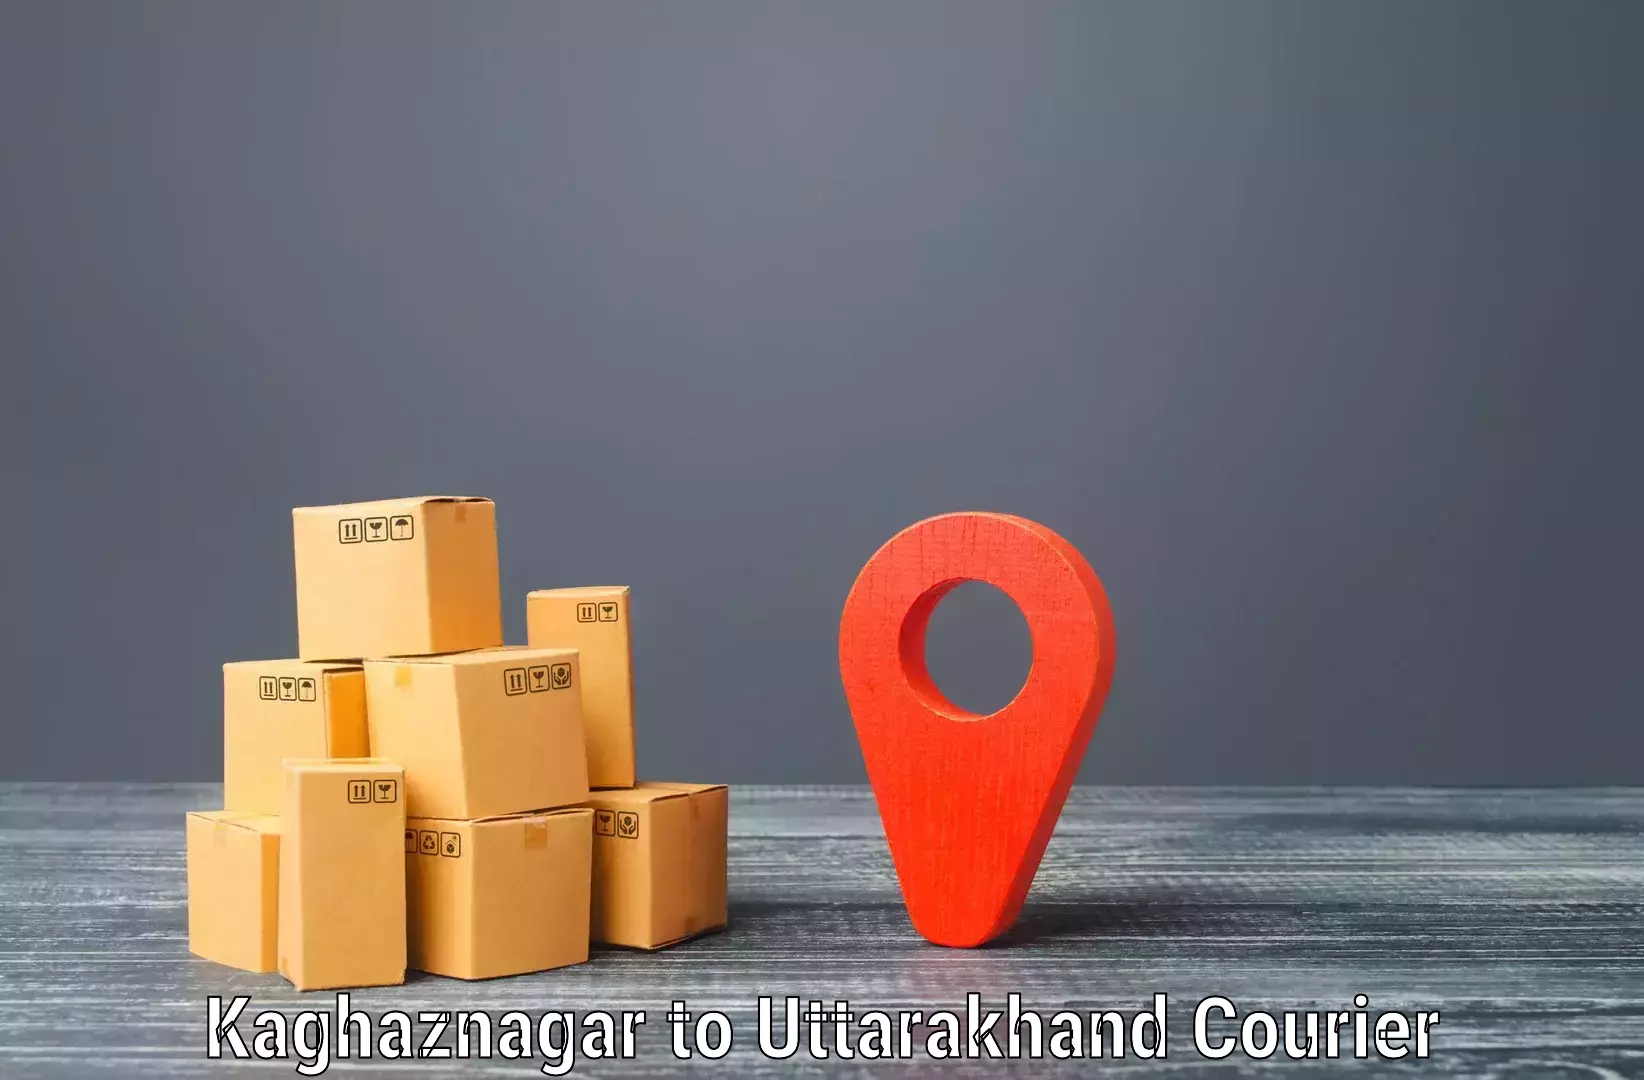 Automated parcel services Kaghaznagar to Kotdwara